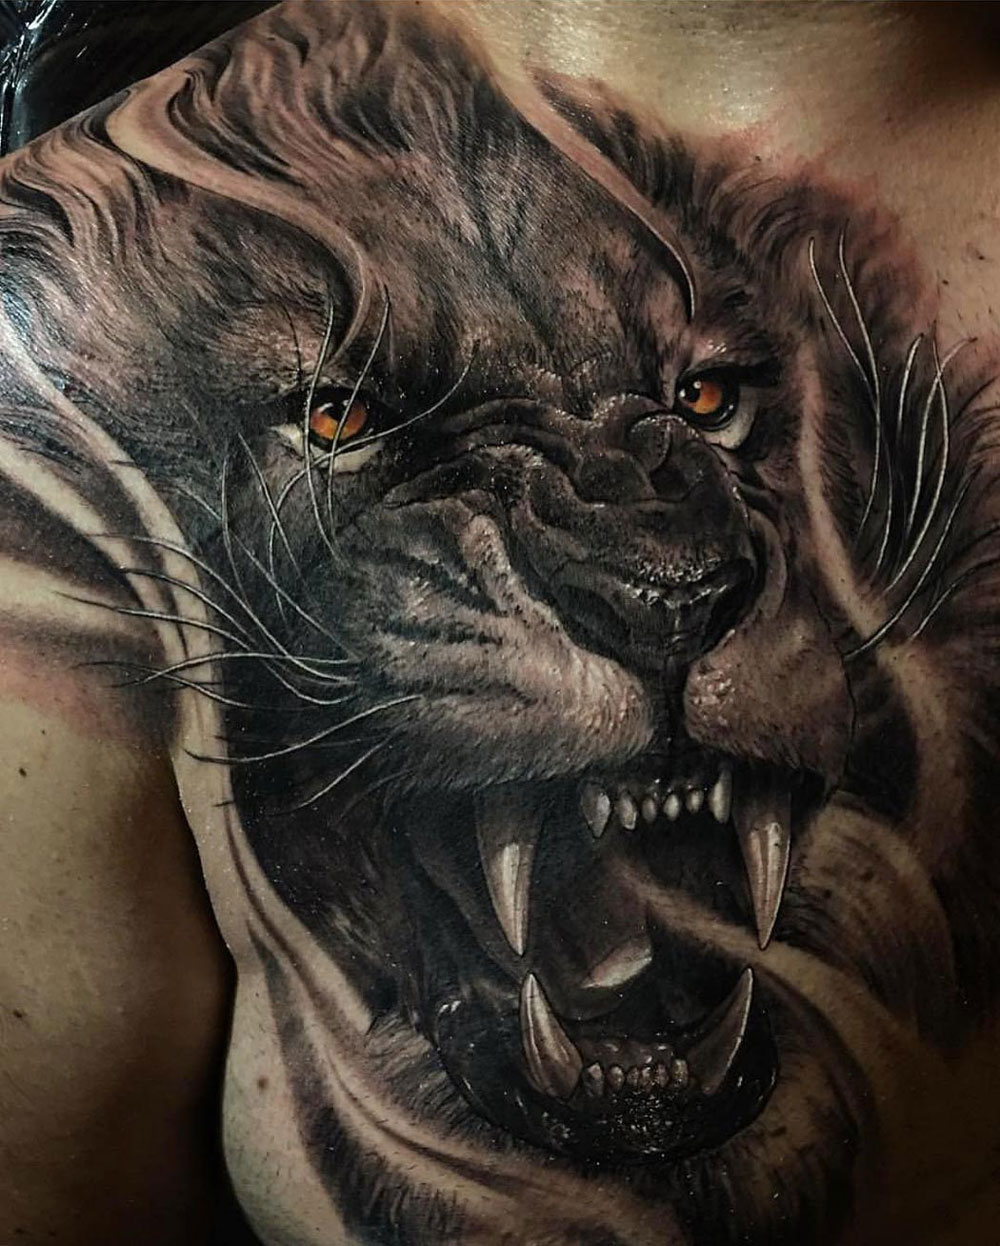 Roaring Lion Chest Tattoo